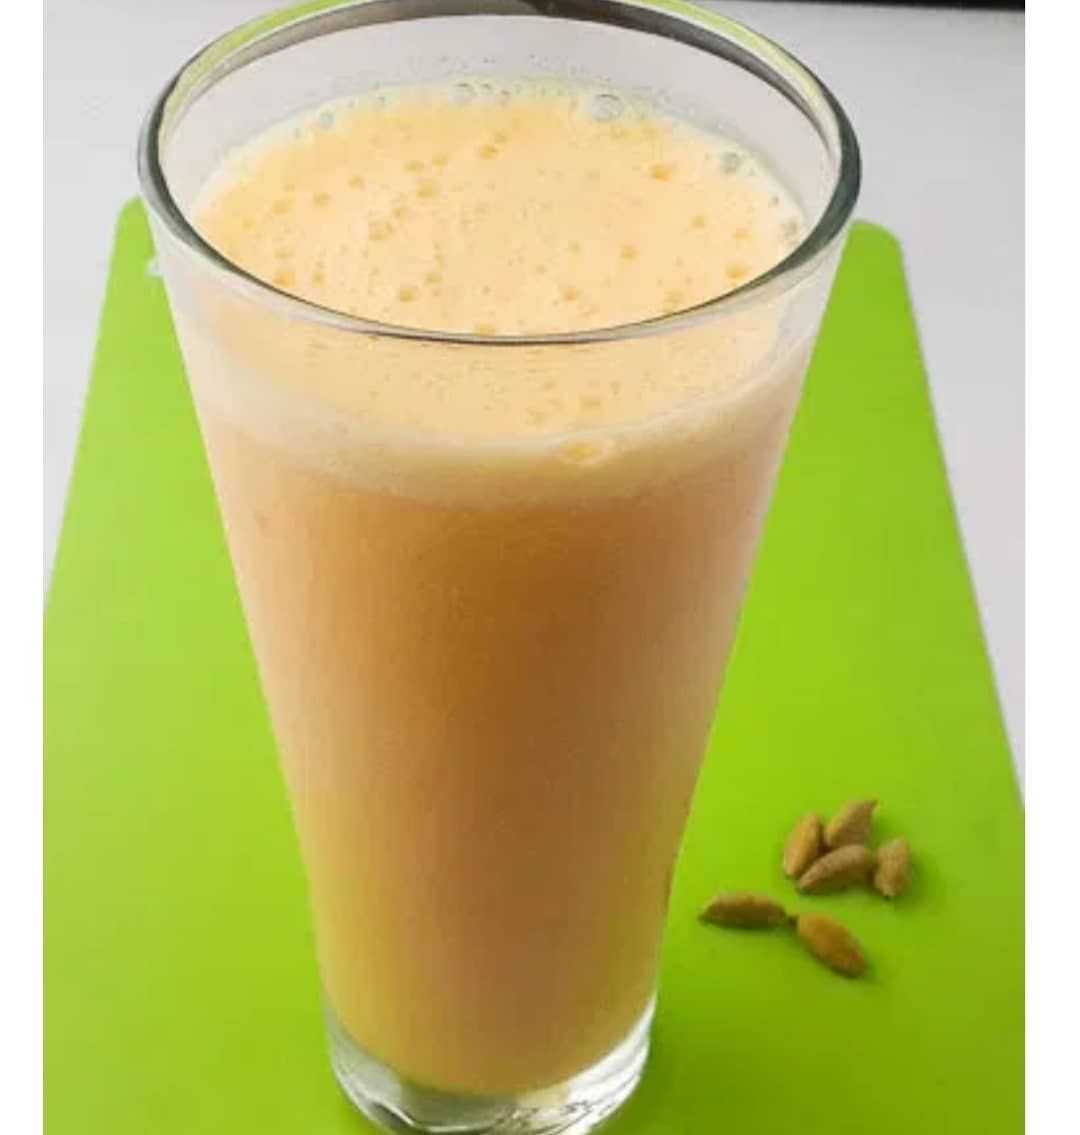 Celebrate the Mango season with this refreshing glass of Mango Lassi. 🥭
.
Recipe in bio.
https://www.thepretendchef.com/mango-lassi/
.
.
.
.
.
.
#foodblogger #nigerianfoodblogger #africanfoodblogger #jamaicanfood #indianfood #mangolassi #mangojuice #nigerianfood #indiandrink #indianwedding #pretendchefofficial